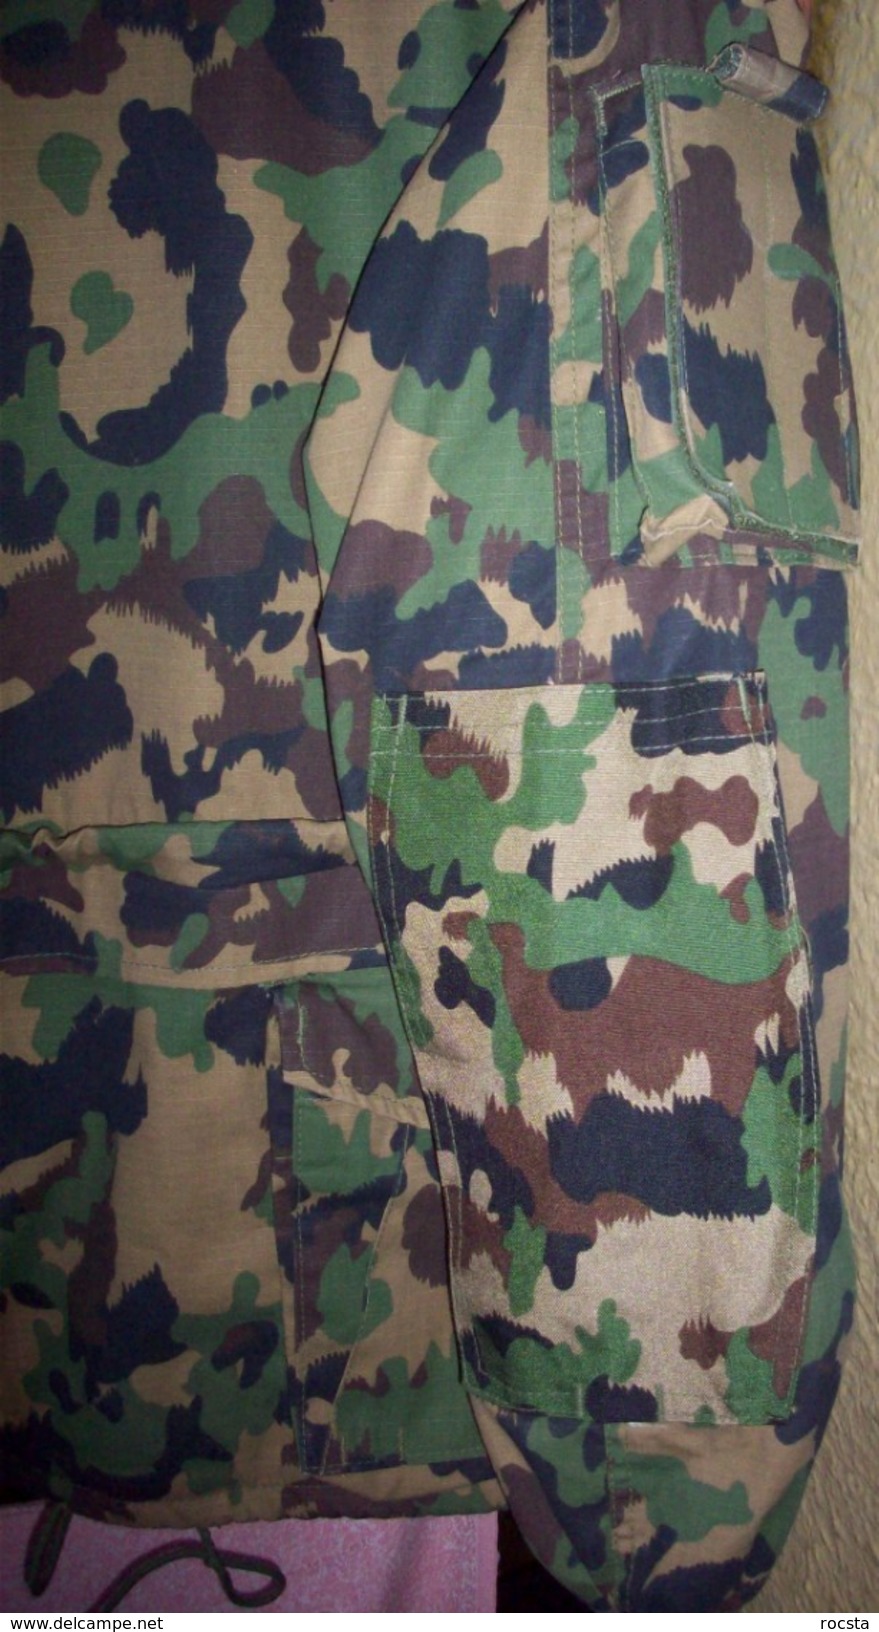 Parka weatherproof Claw Gear swiss camouflage TAZ 90 size XL - 24 pockets!